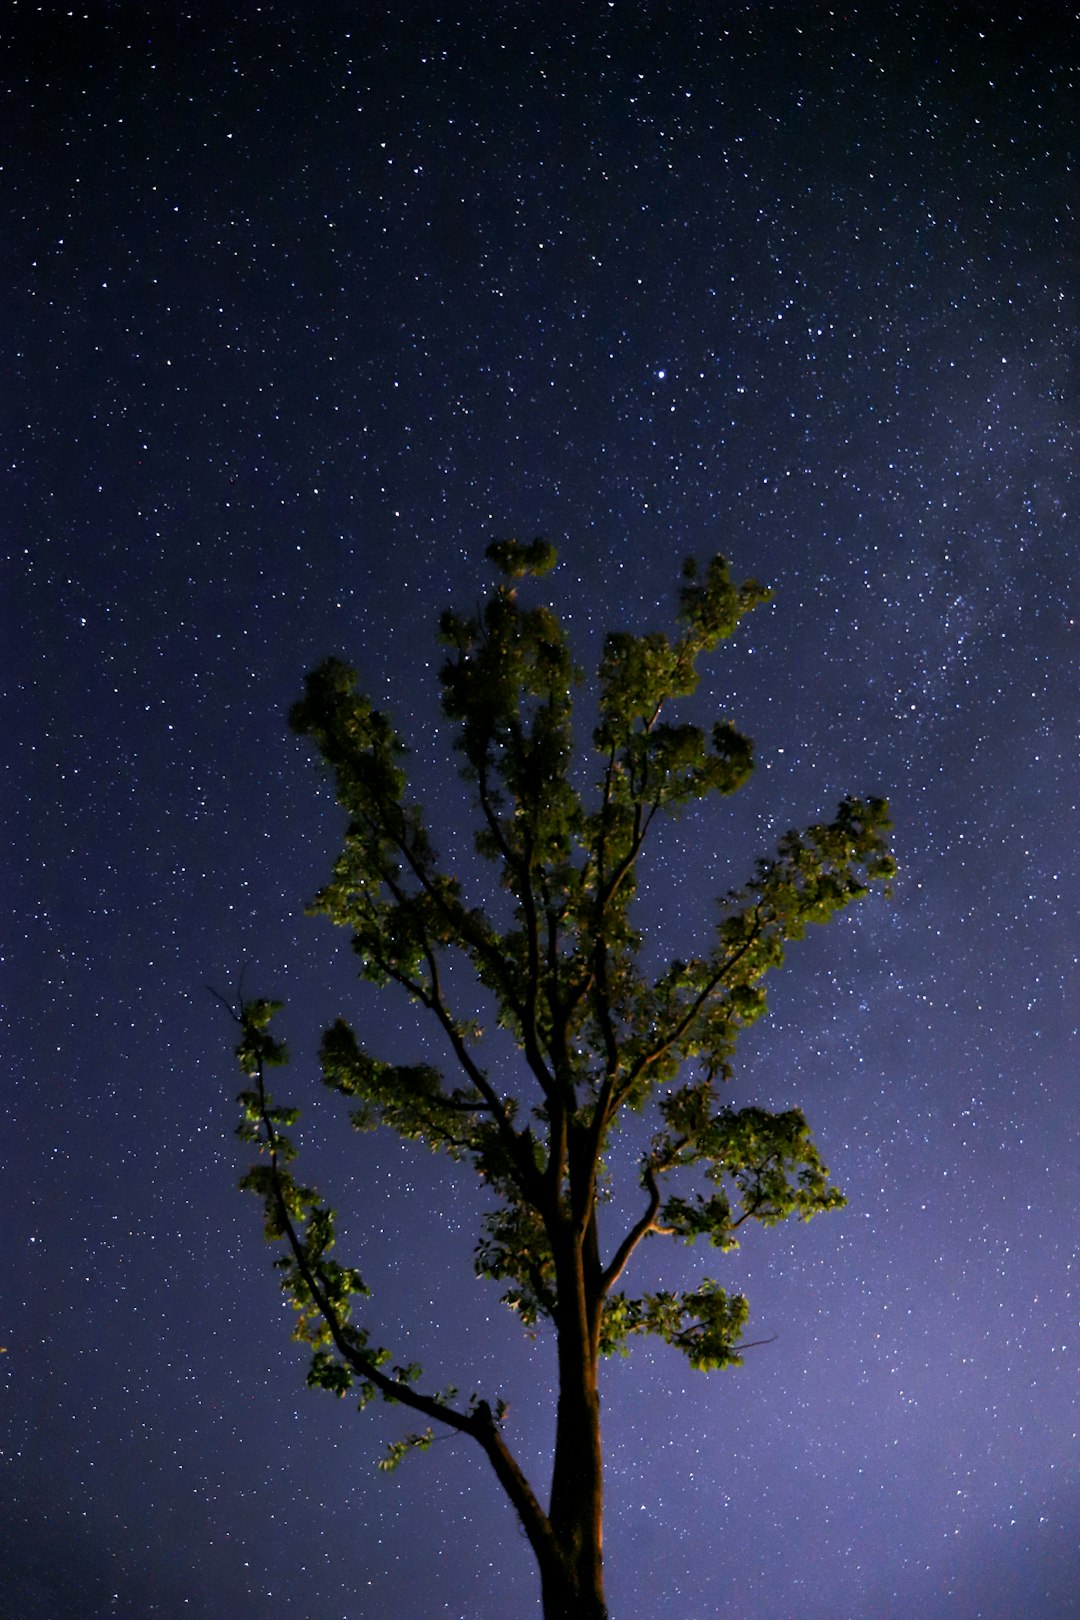 green leafed tree under sky full of star